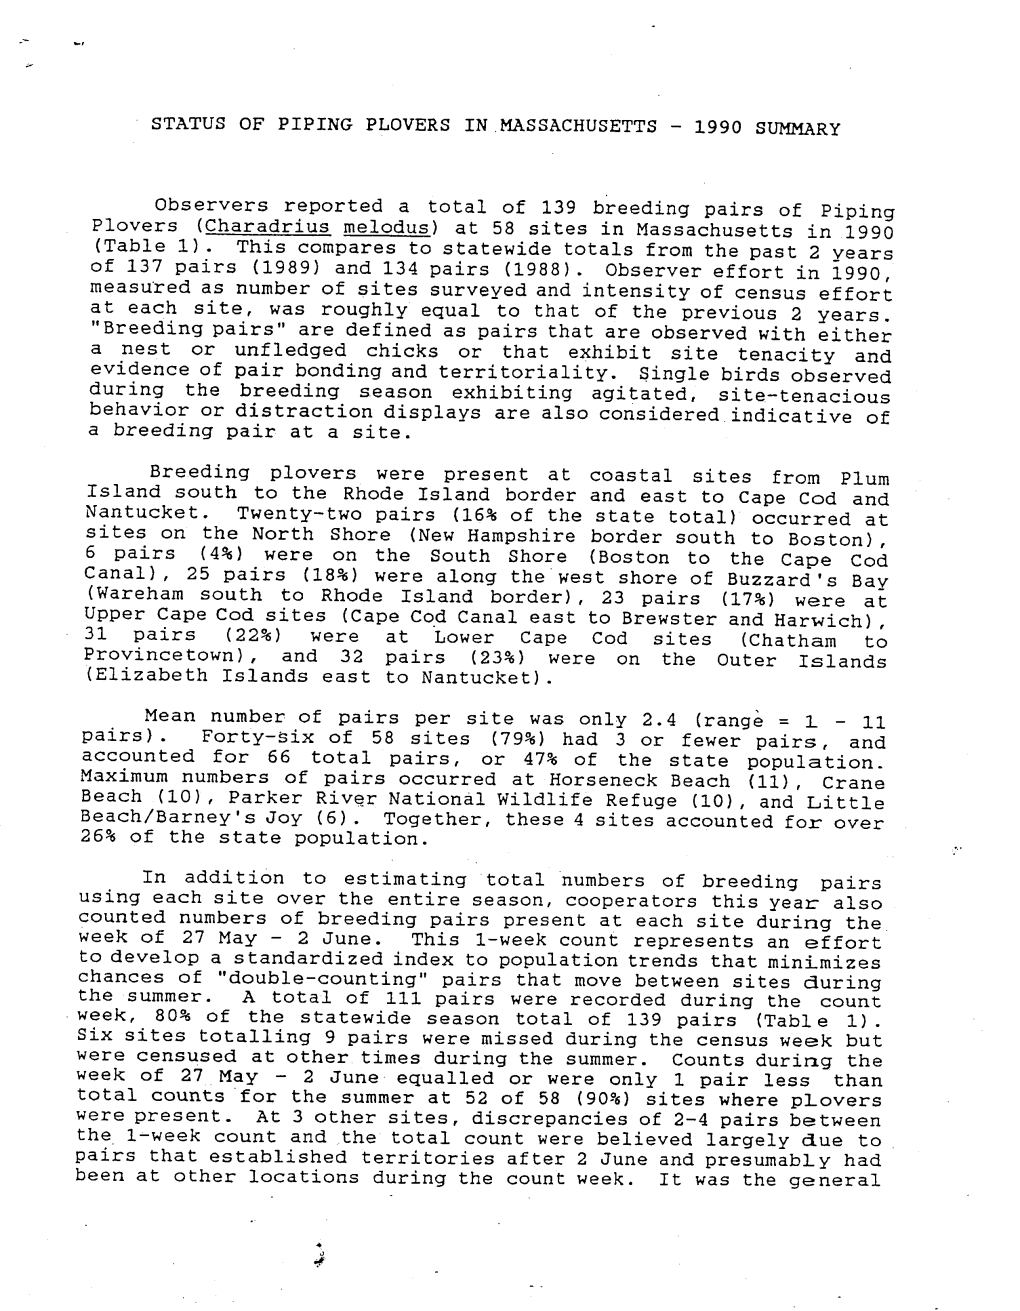 Status of Piping Plovers in .Massachusetts - 1990 Summary